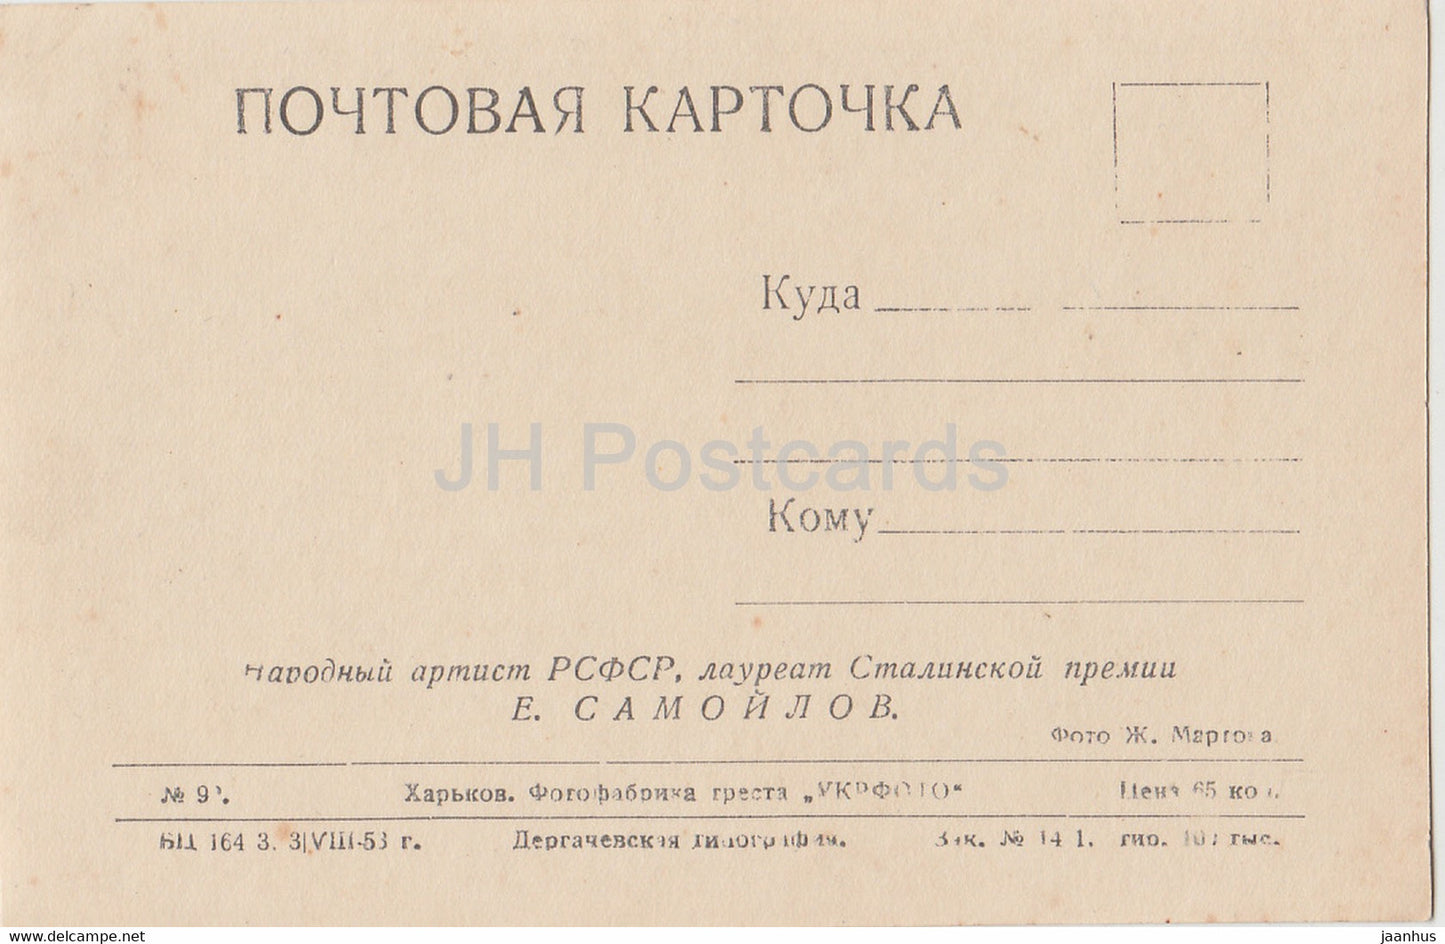 Acteur soviétique Yevgeny Samoylov - Film - Film - 1953 - carte postale ancienne - Russie URSS - inutilisé